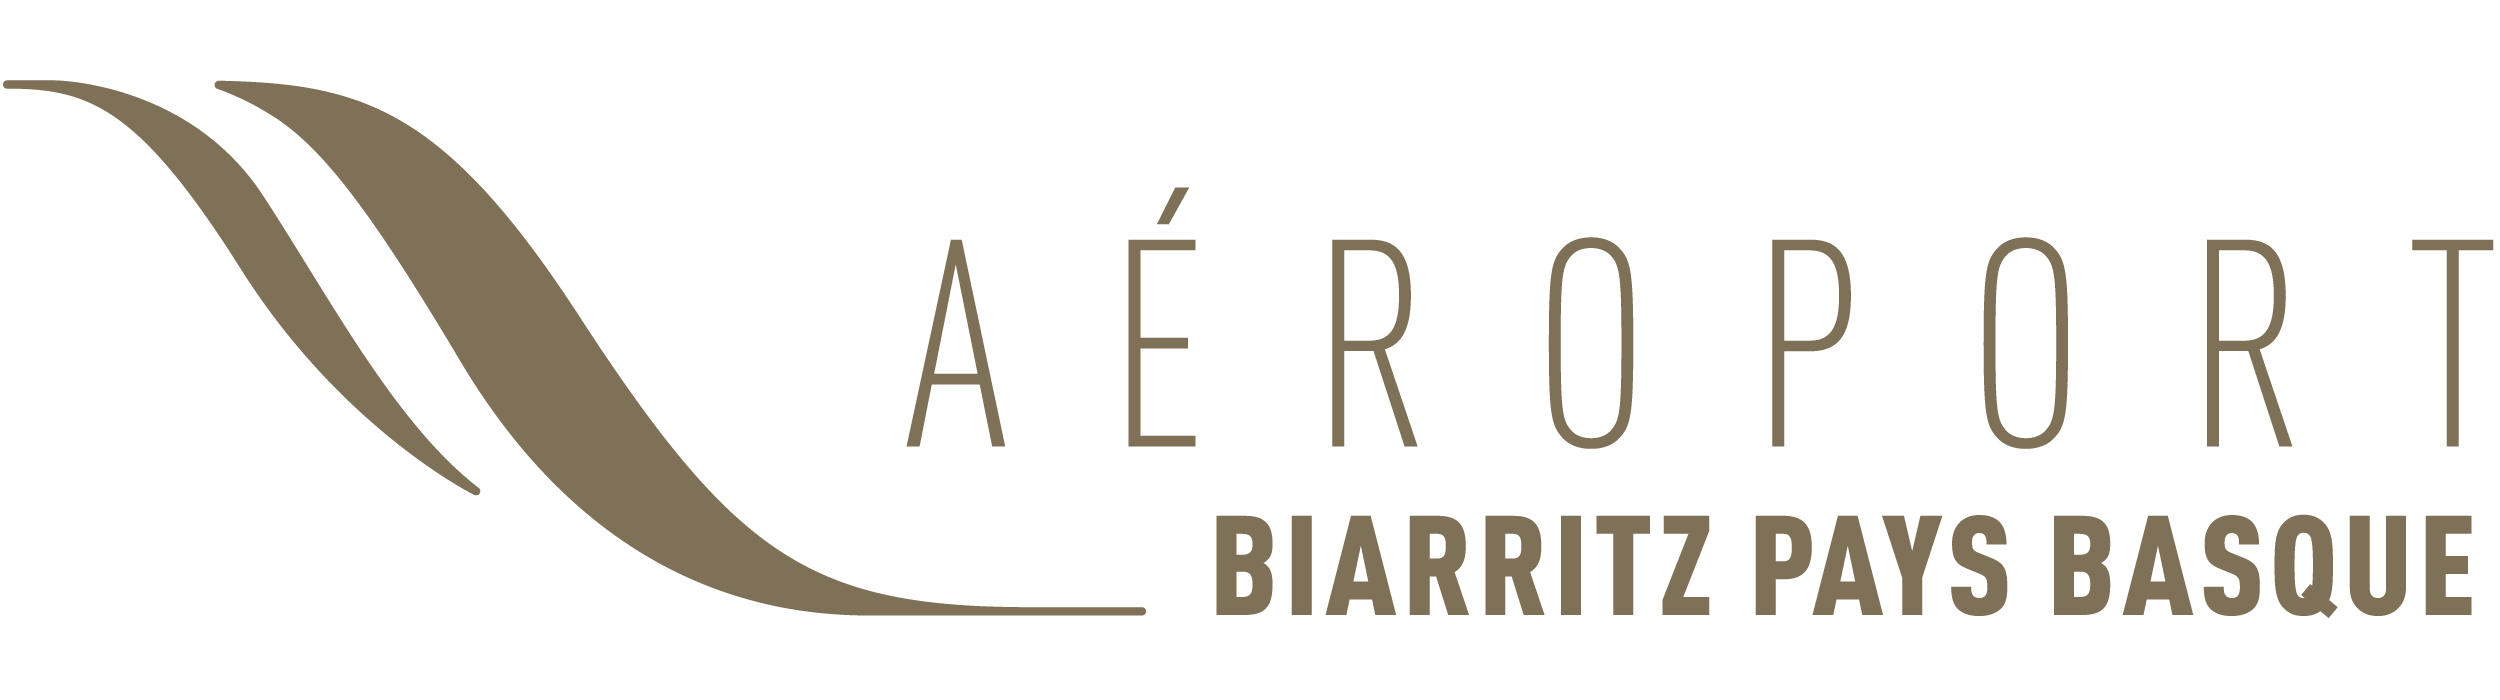 Aéroport Biarritz Pays Basque